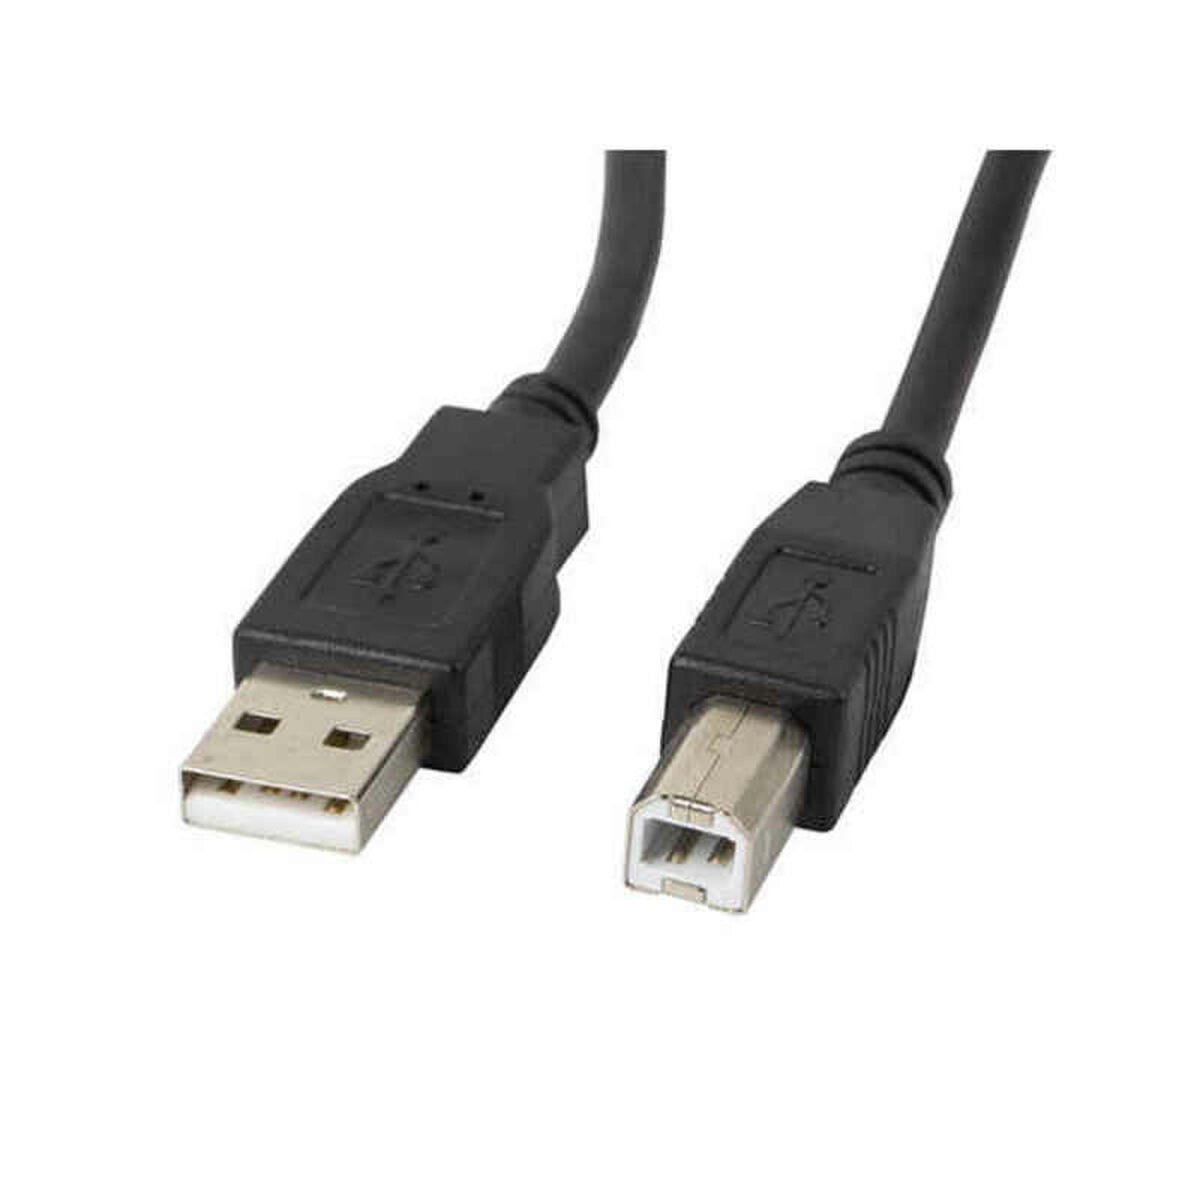 Richiedi informazioni su cod. 290023-CUSBPR1-8M Cavo USB Stampante